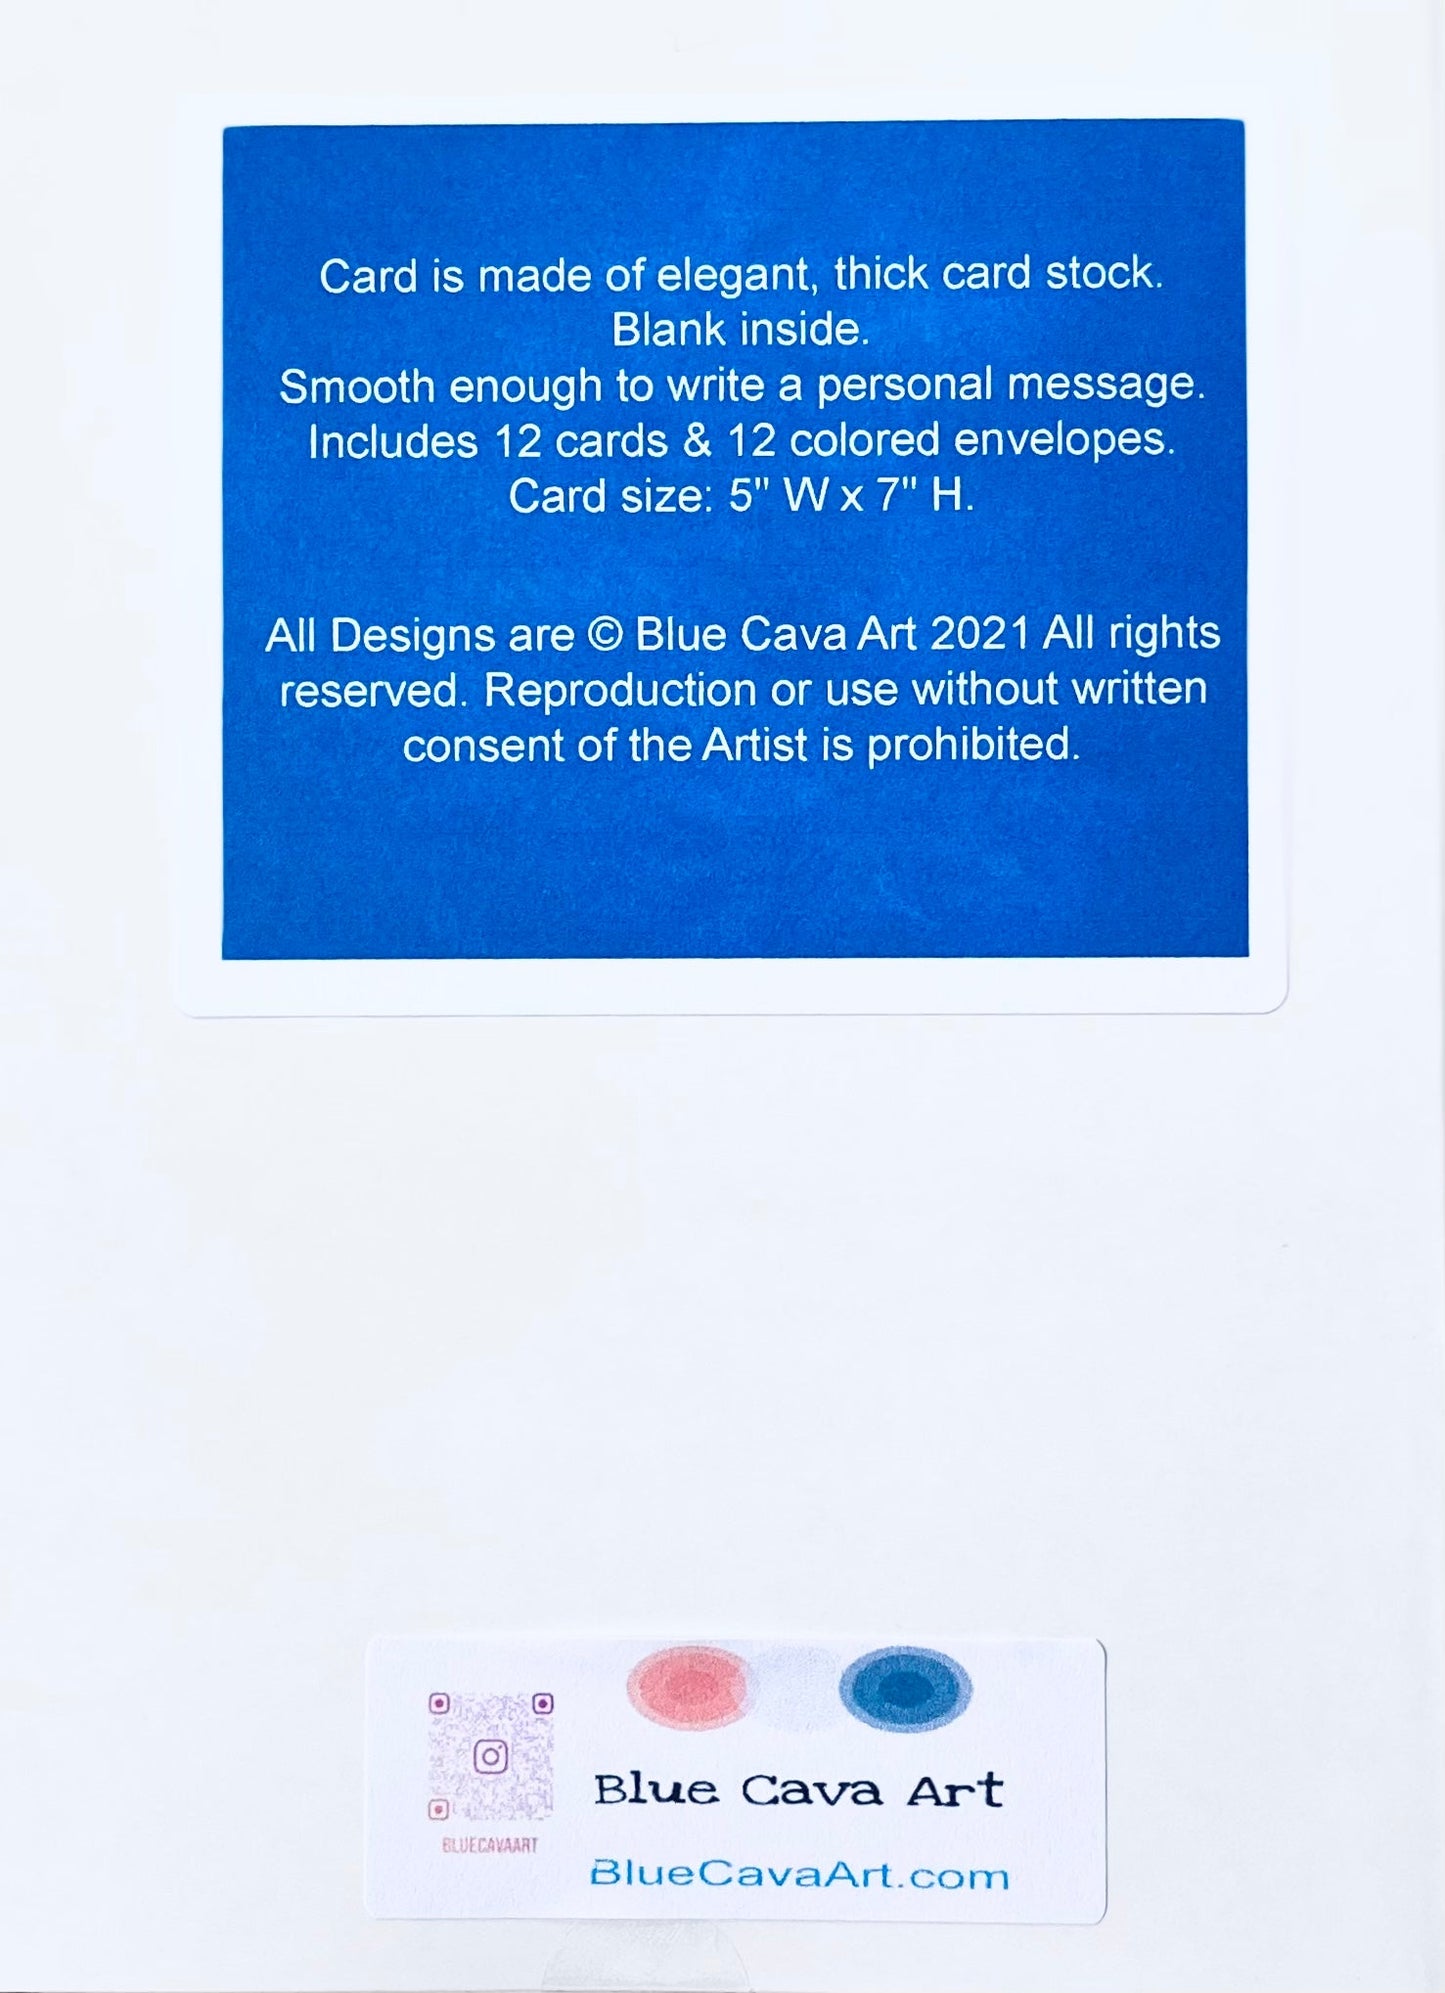 Artful Greeting card - Blue Cava